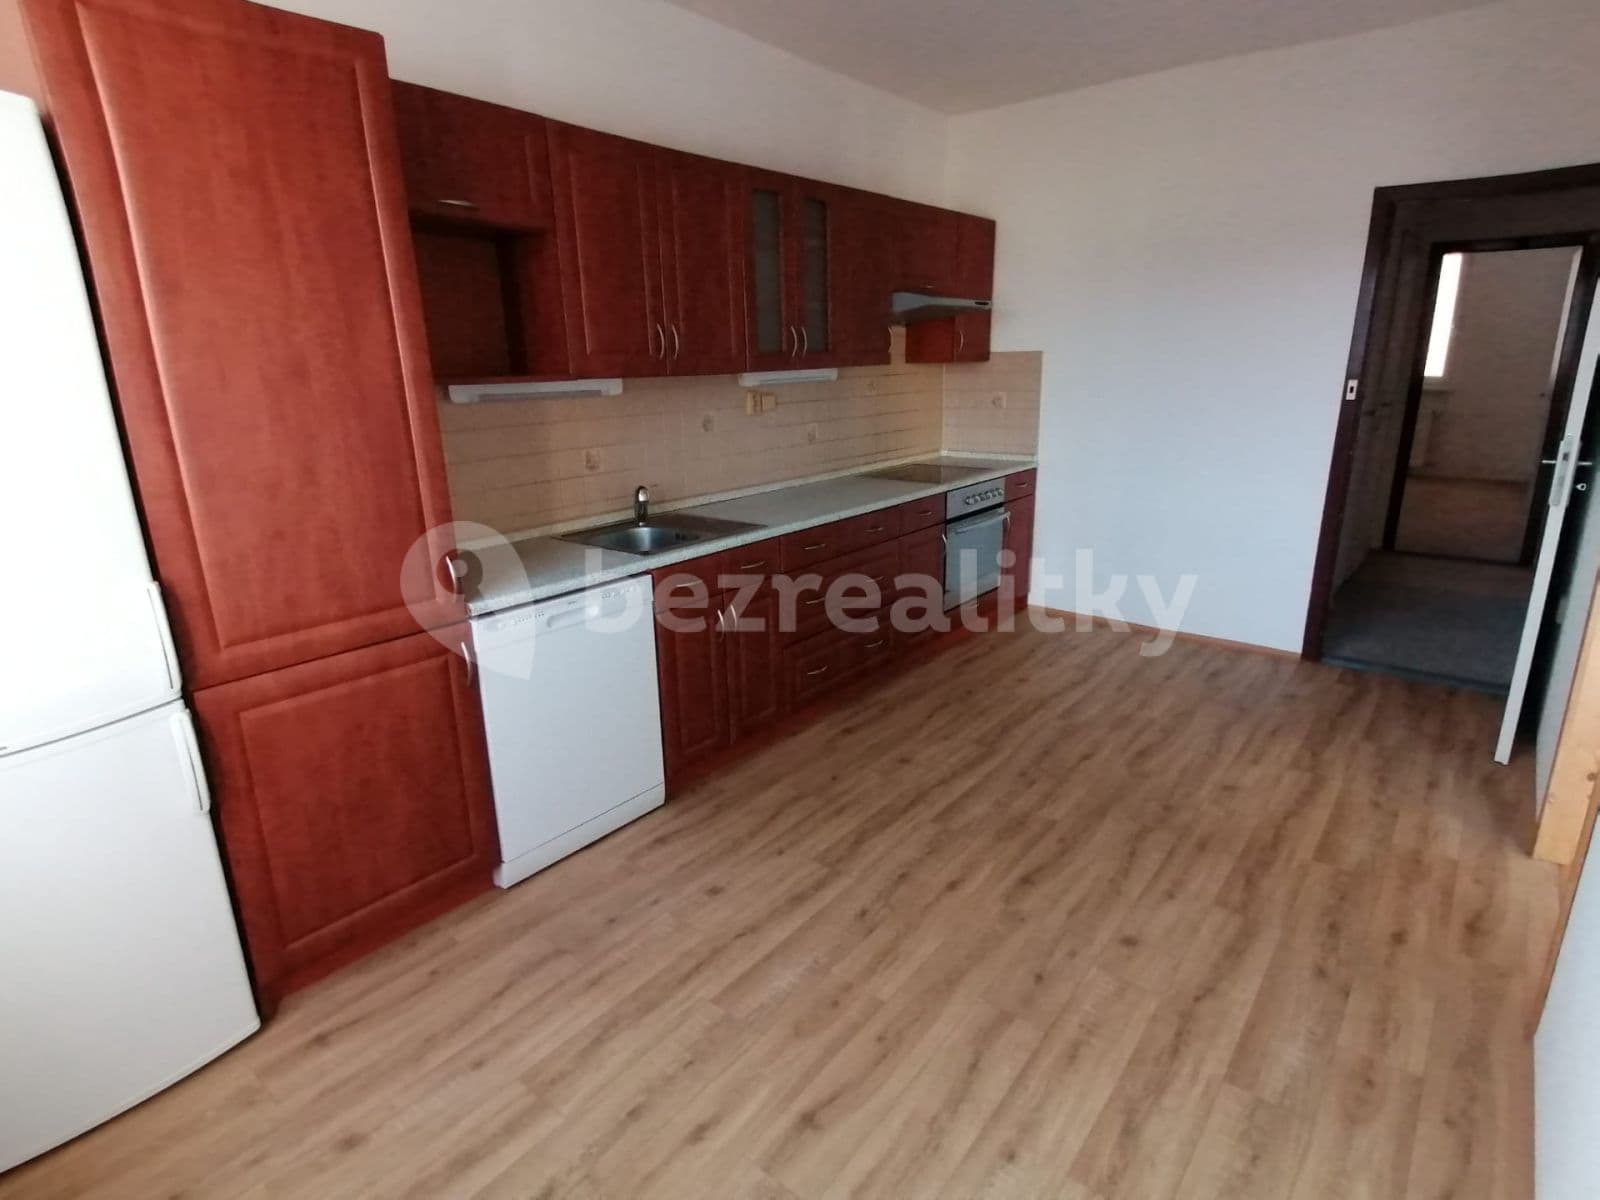 3 bedroom flat to rent, 74 m², Dvořákova, Děčín, Ústecký Region